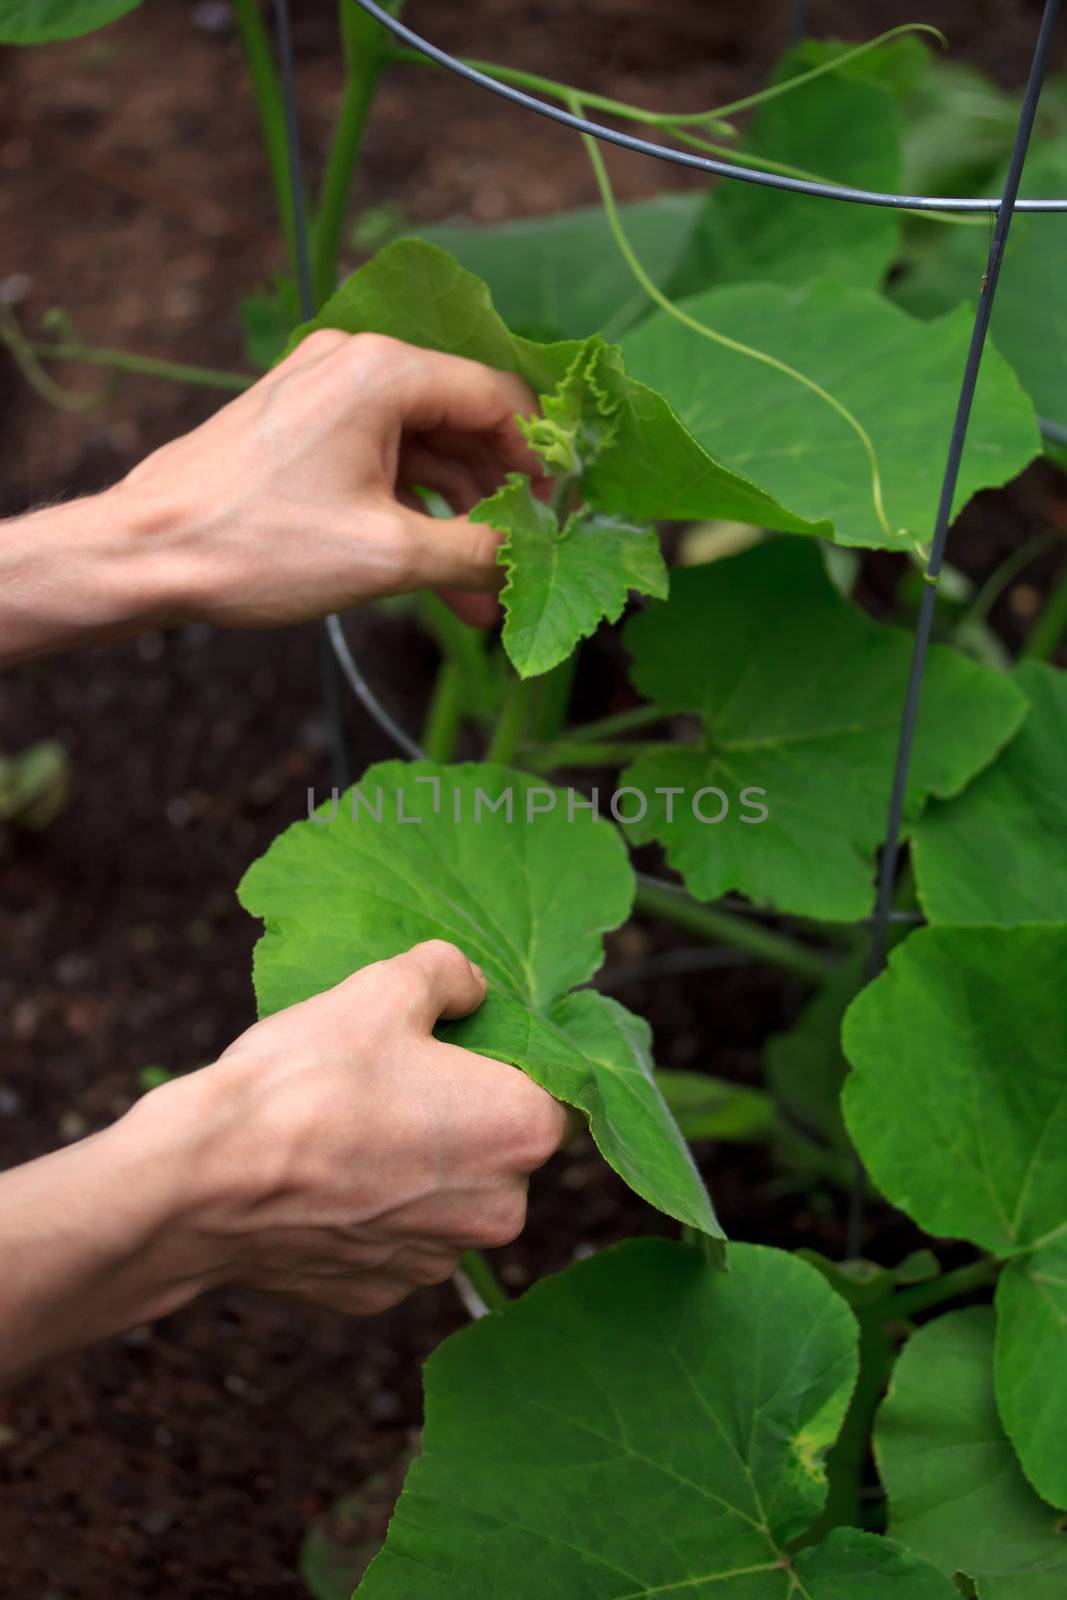 Gardening image, taking care of squash plant